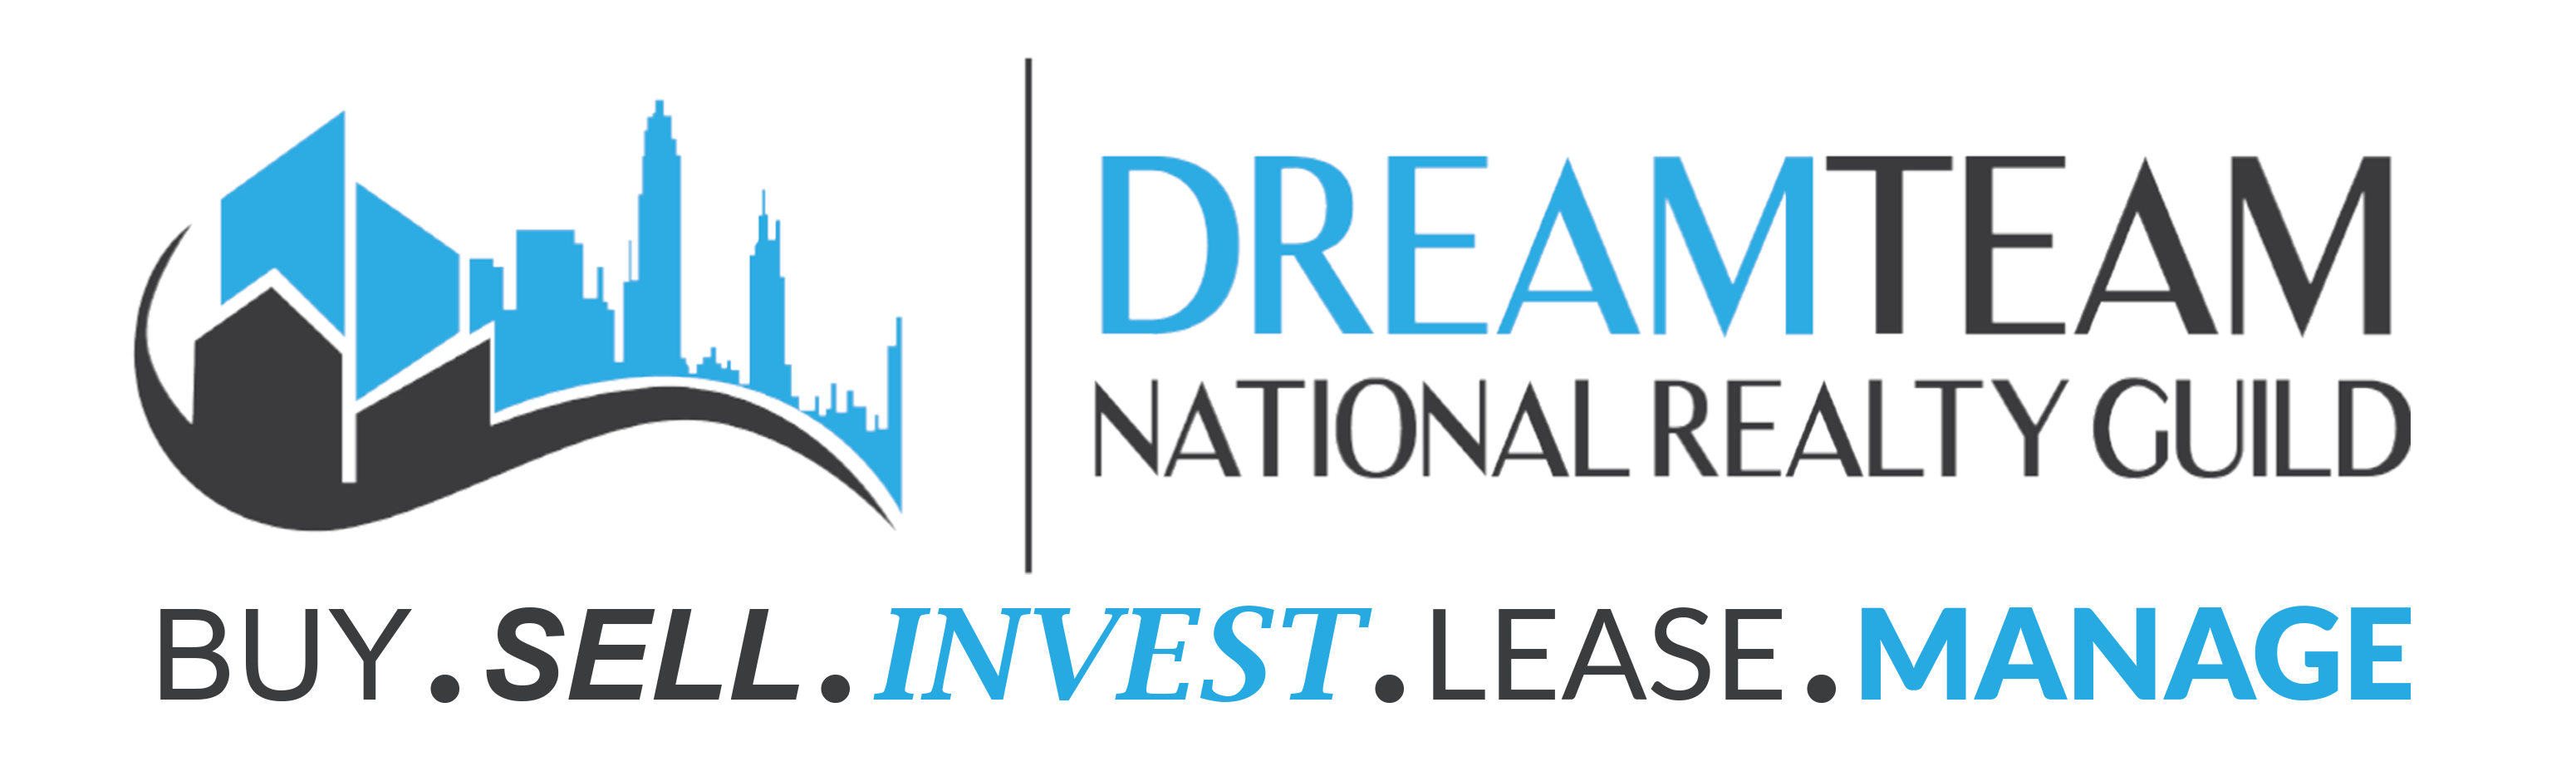 Dreamteam Property Management logo